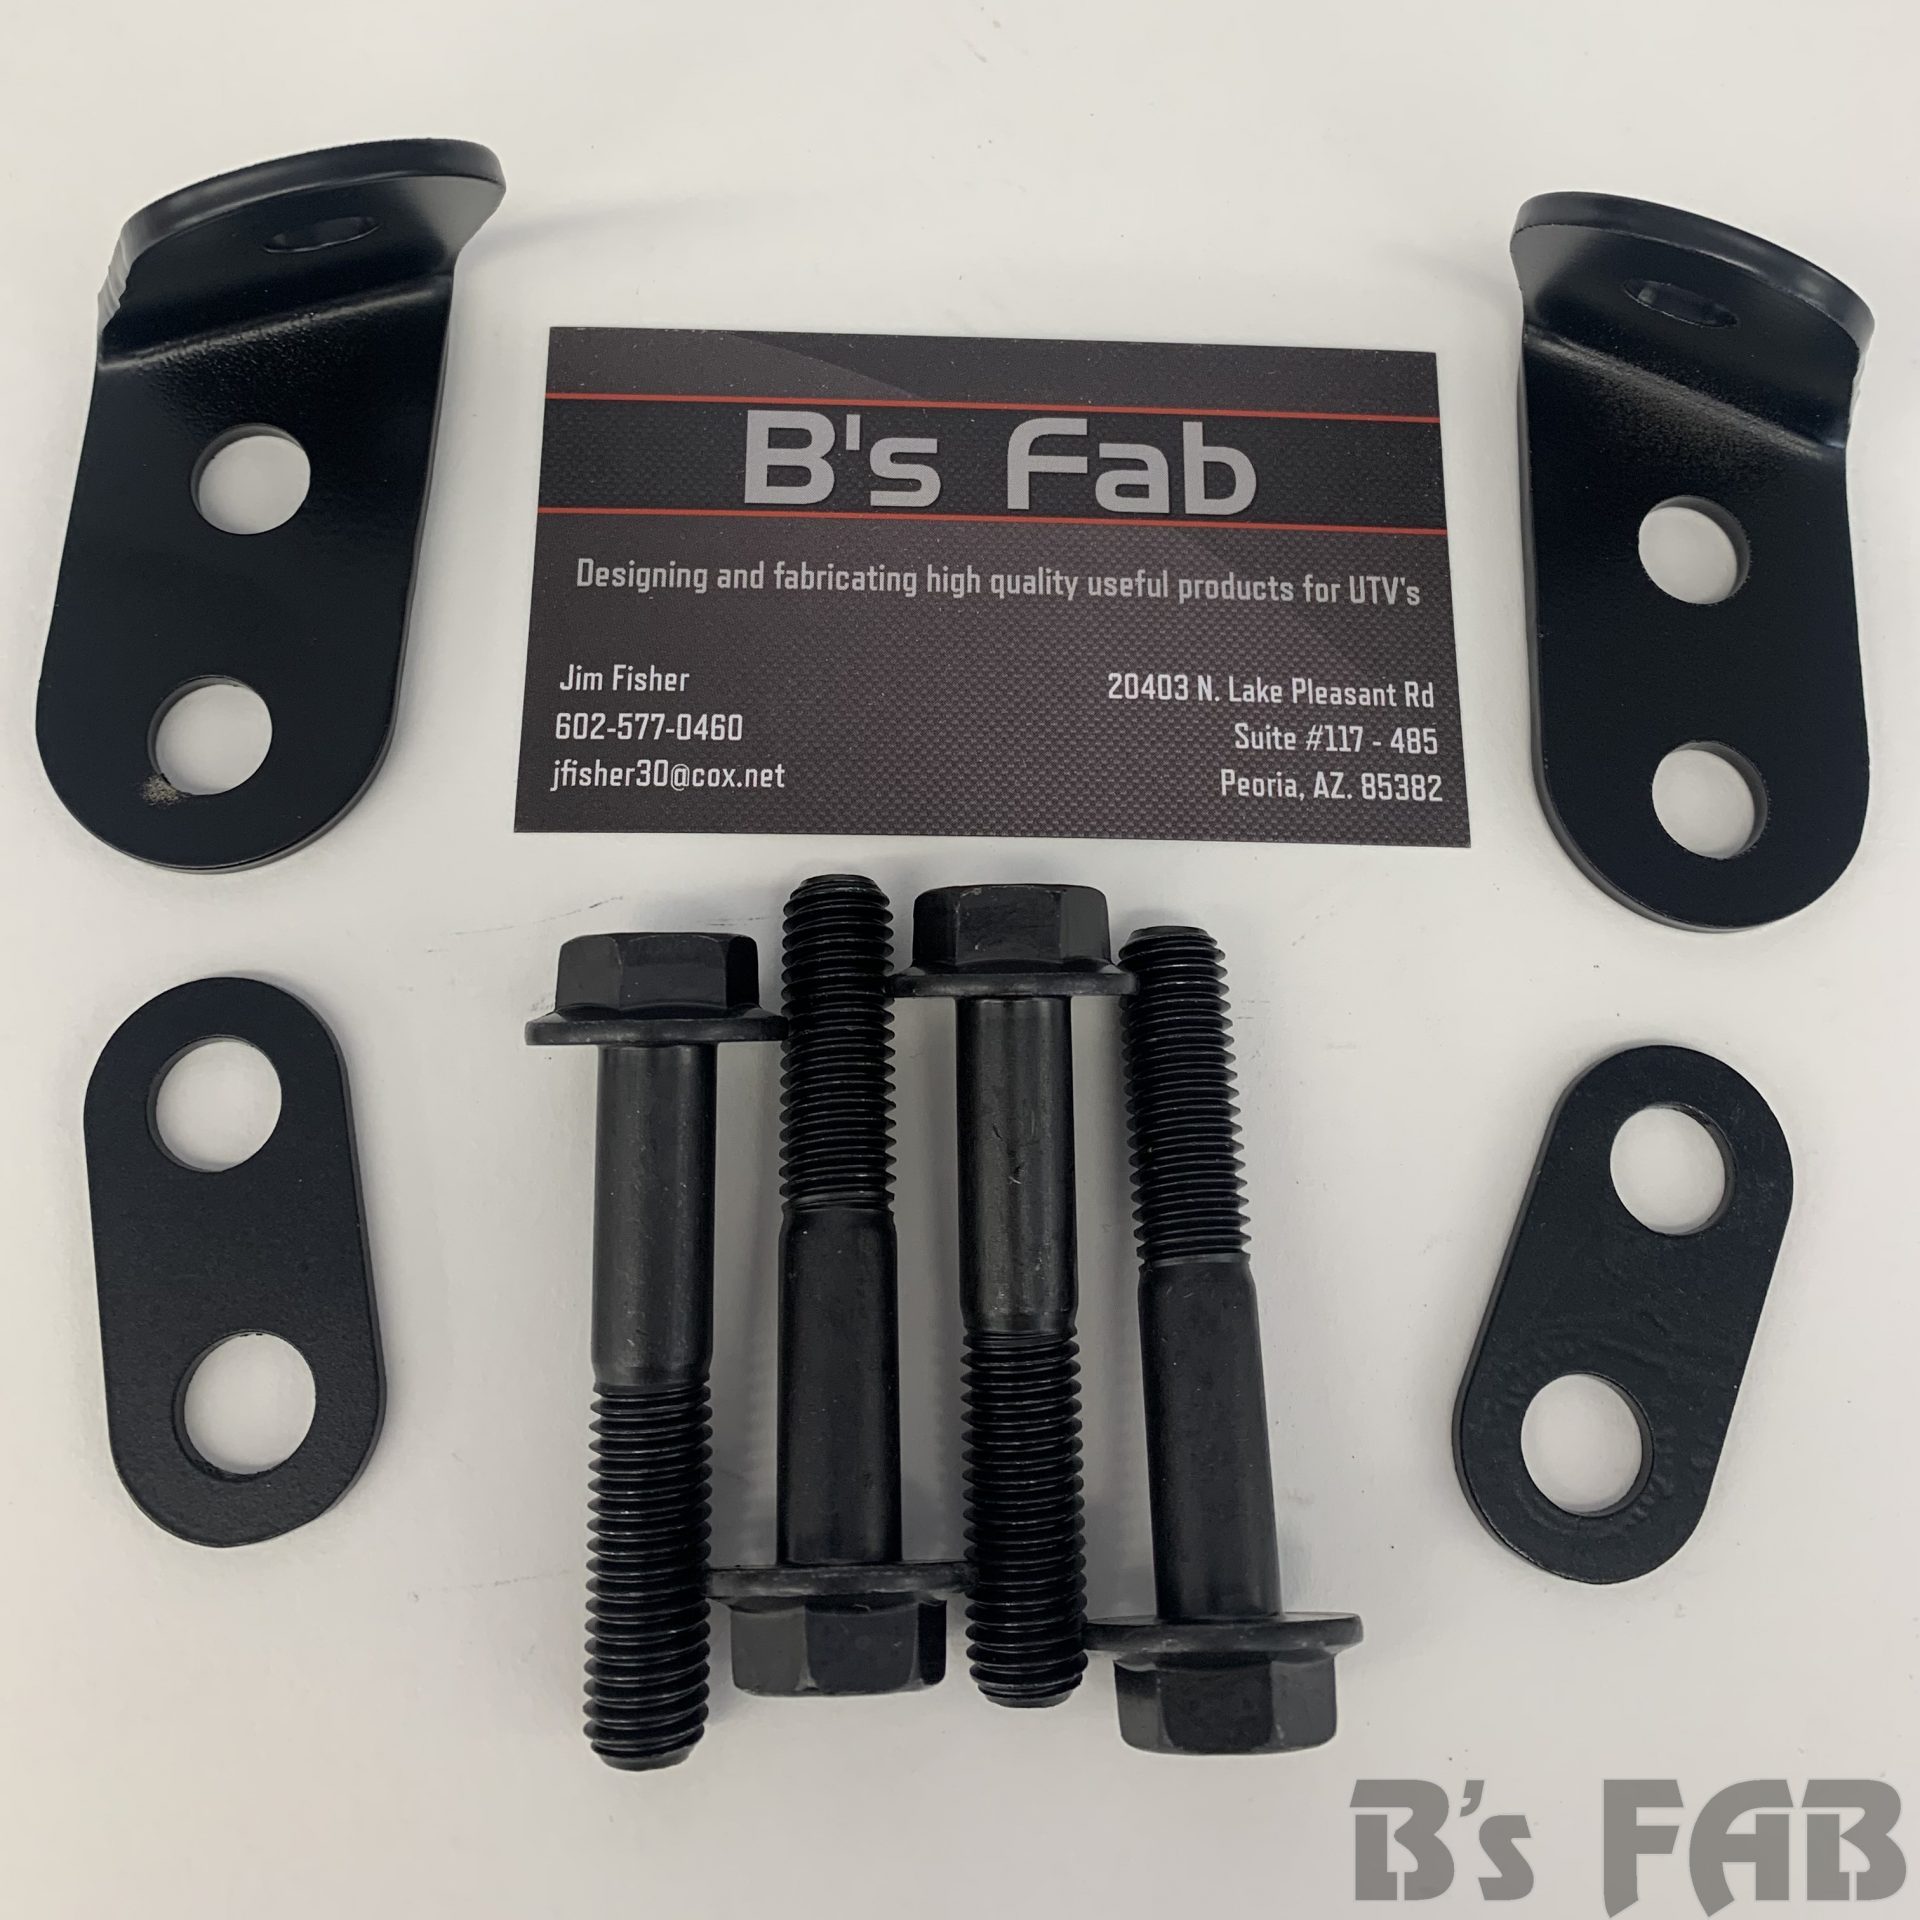 A-Pillar Cube Light Mounting Brackets (pair) - B's Fab UTV